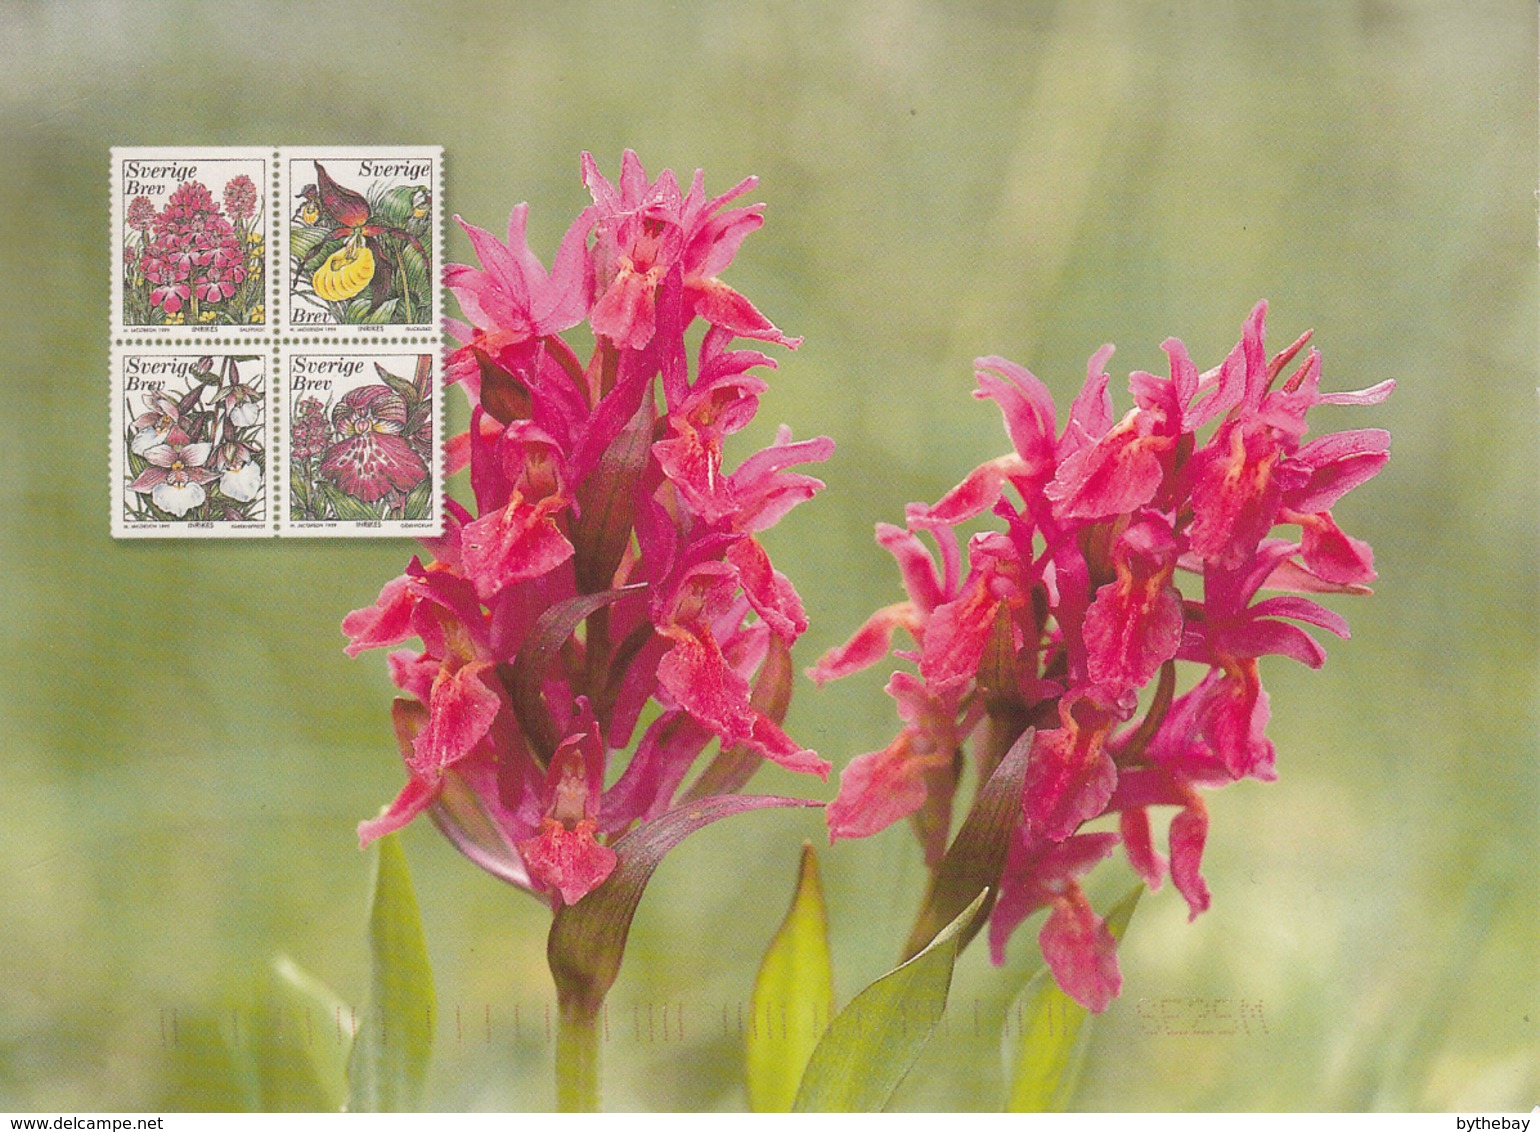 Sweden 1999 Orchids On Stamps Franked Sc #2340 - Timbres (représentations)